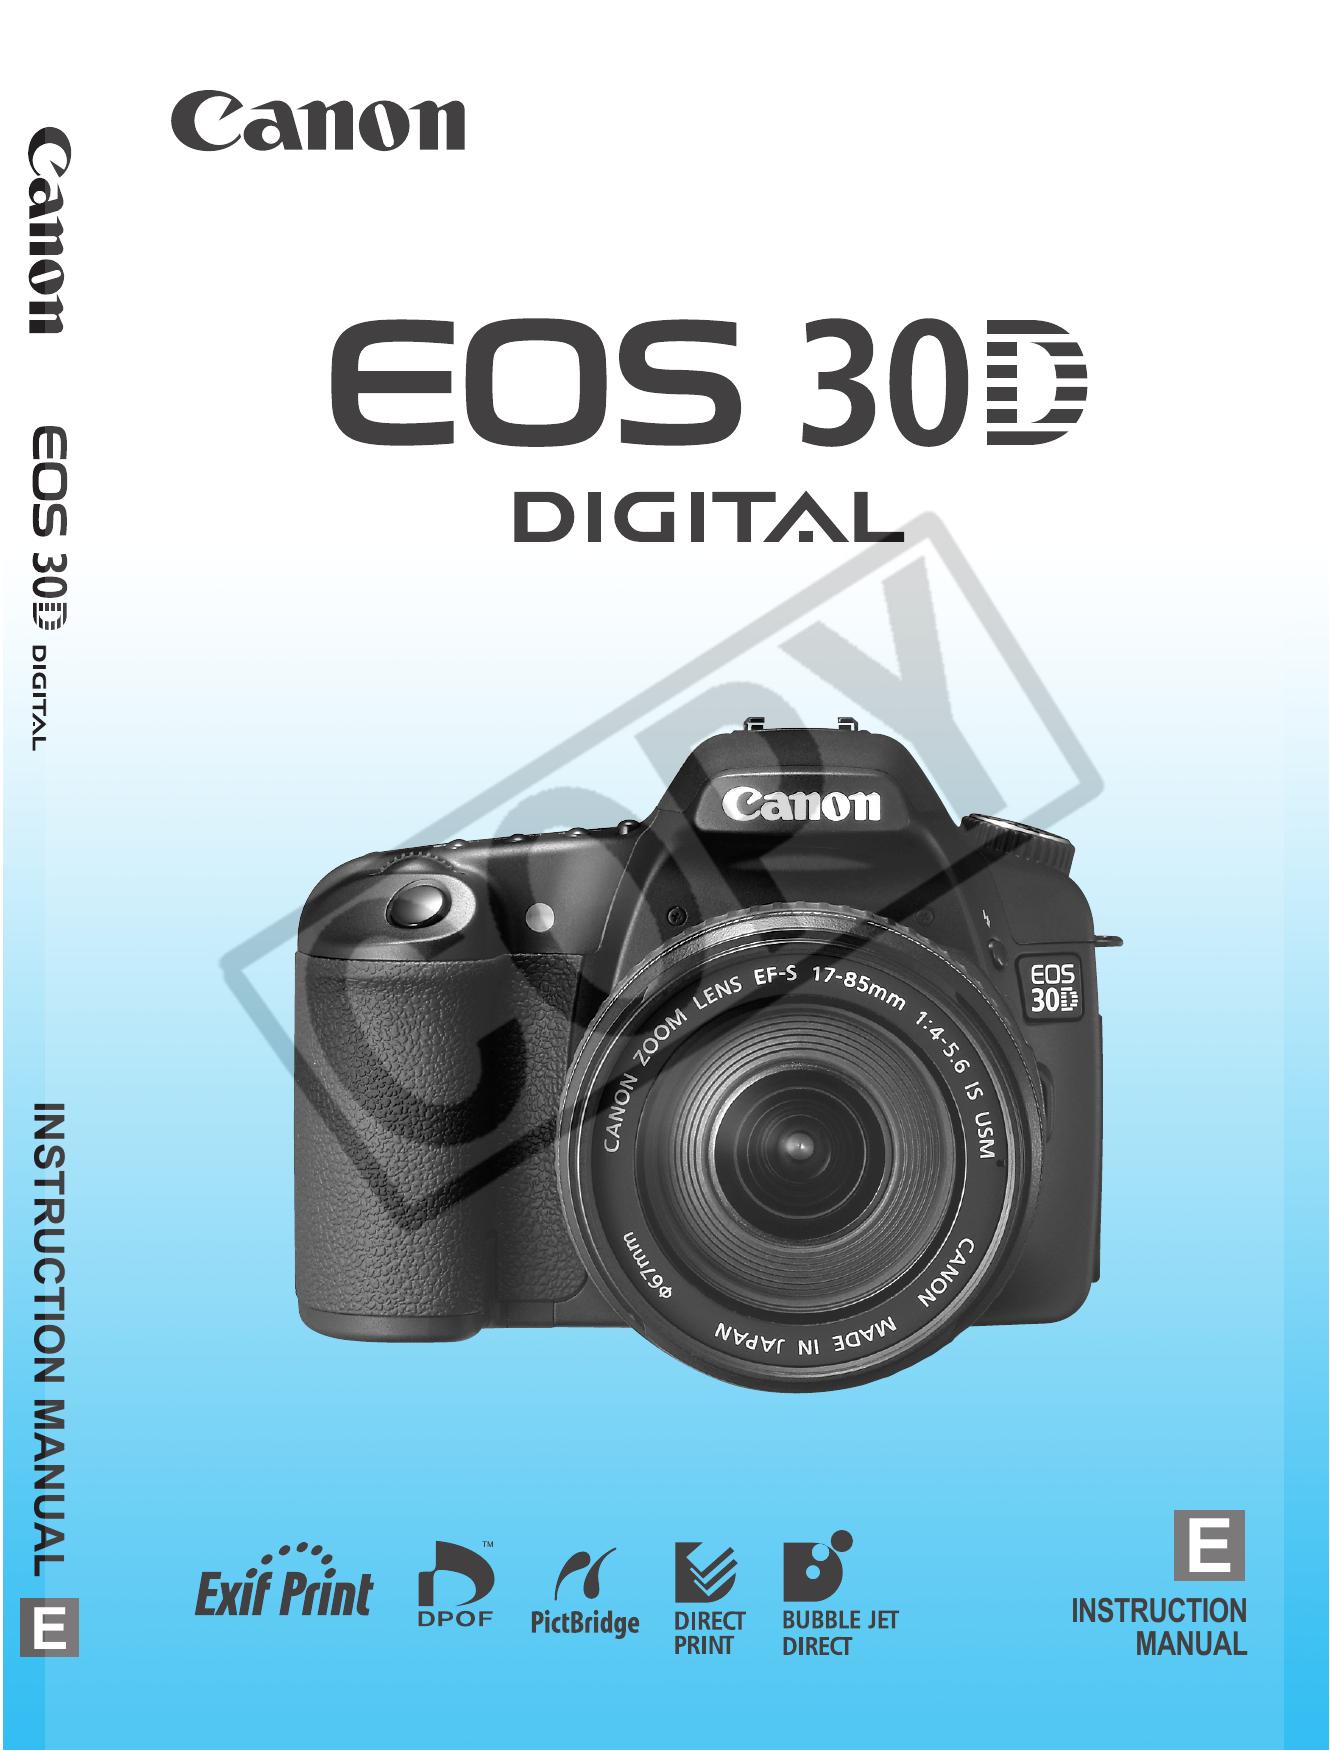 HP (Hewlett-Packard) EOS 30D Digital Camera User Manual